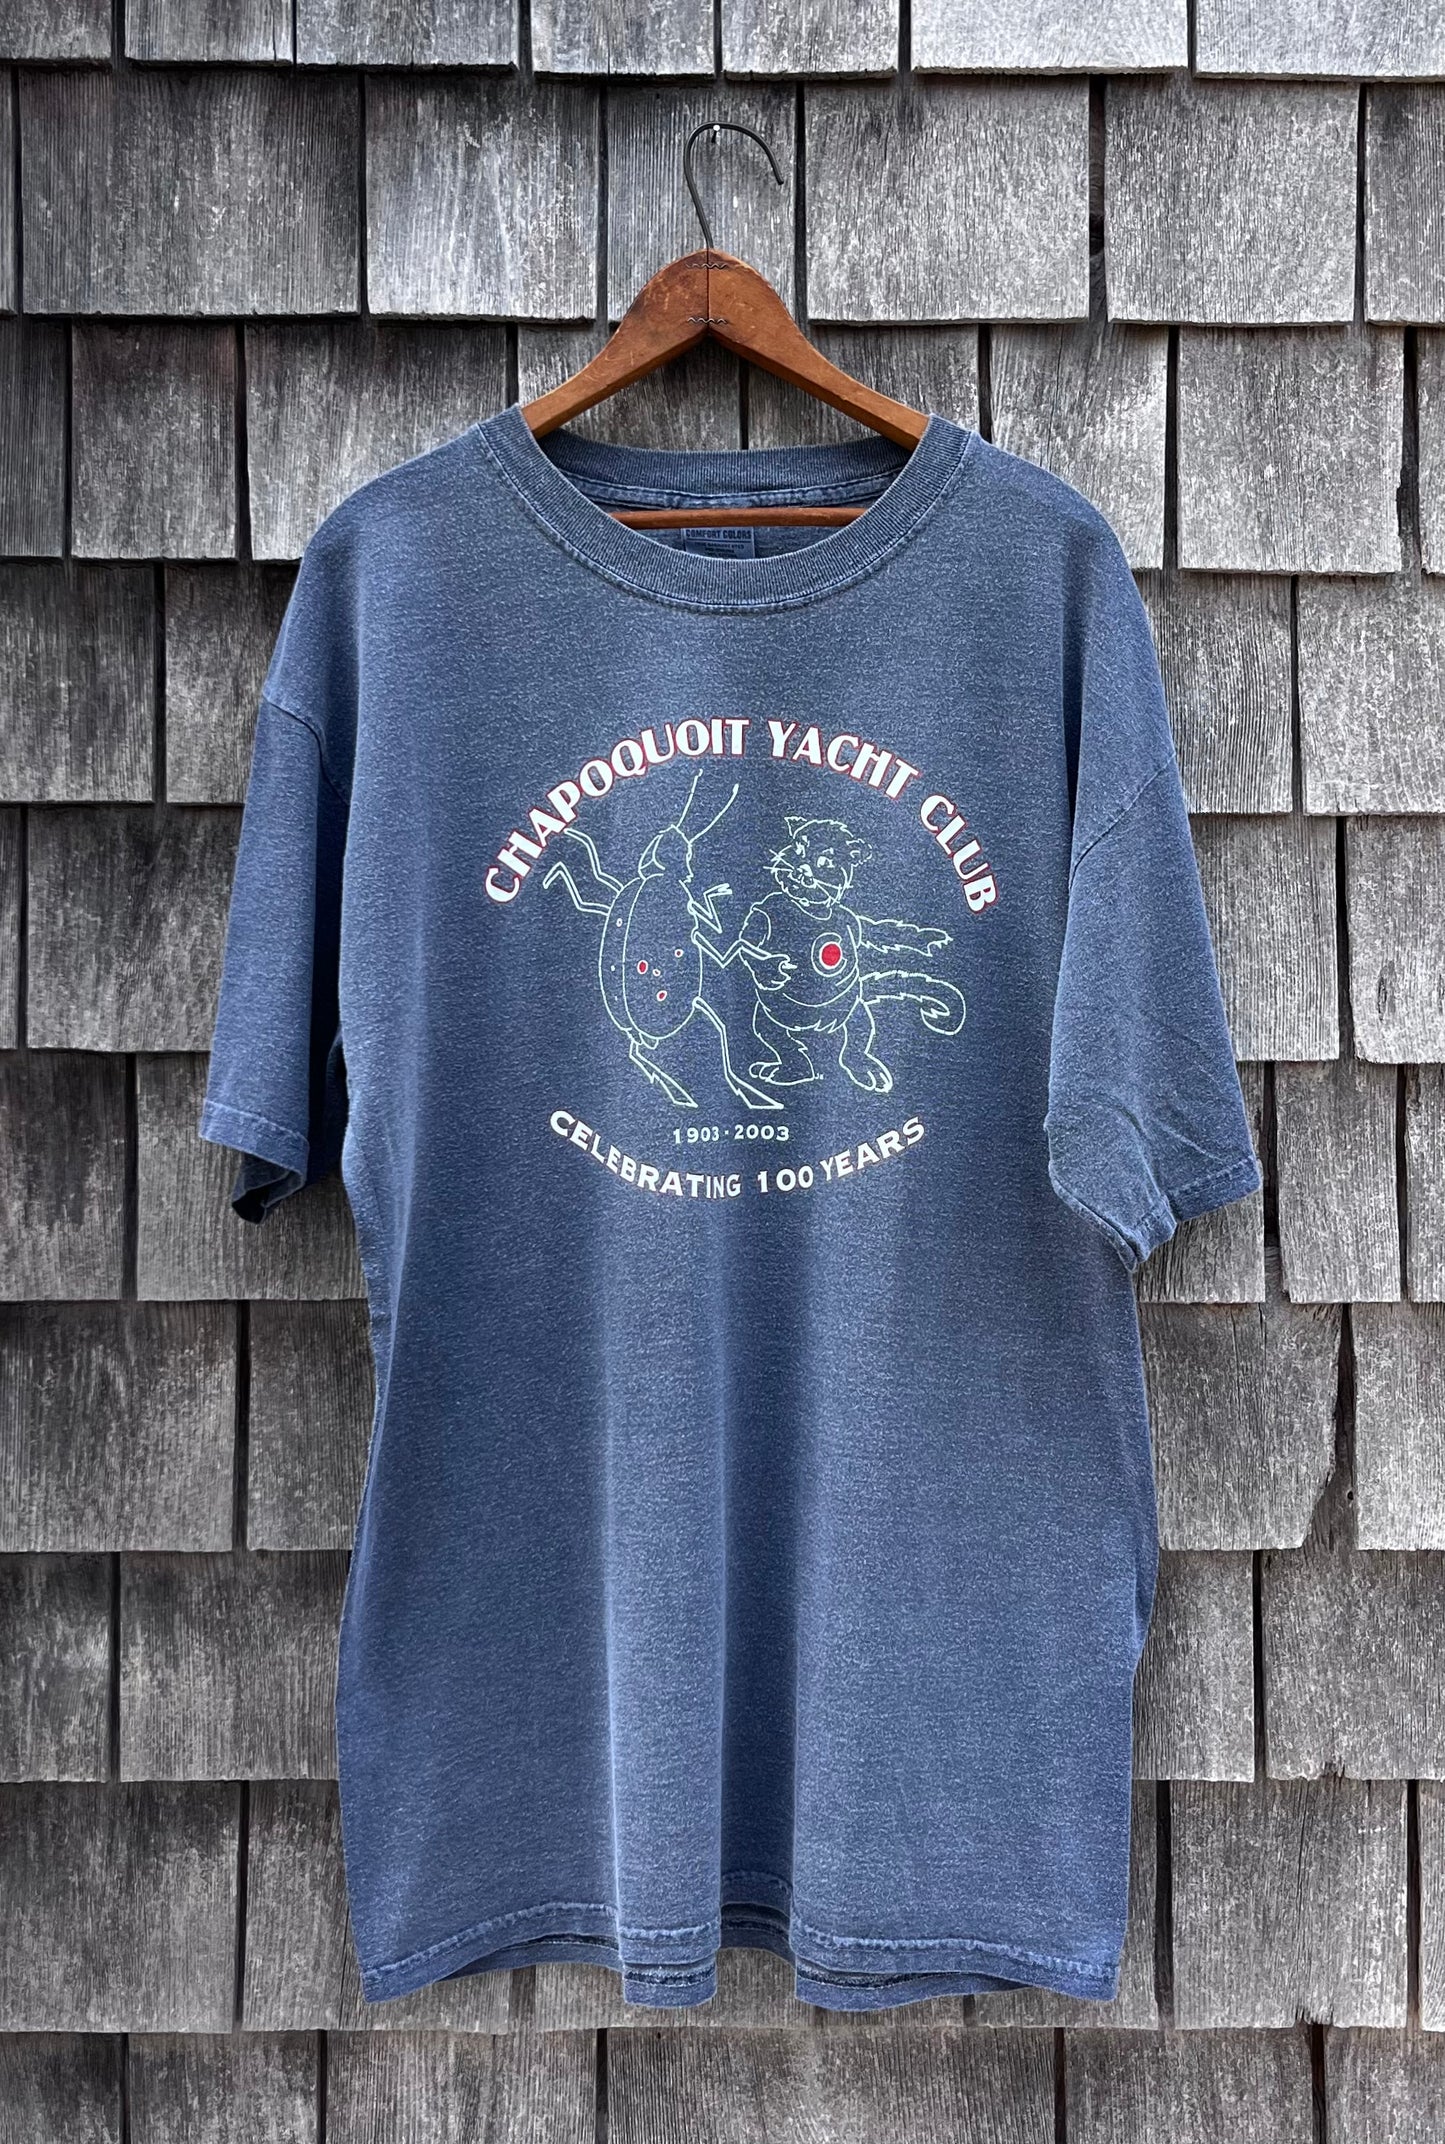 00s Chapoquoit Yacht Club Anniversary T-Shirt